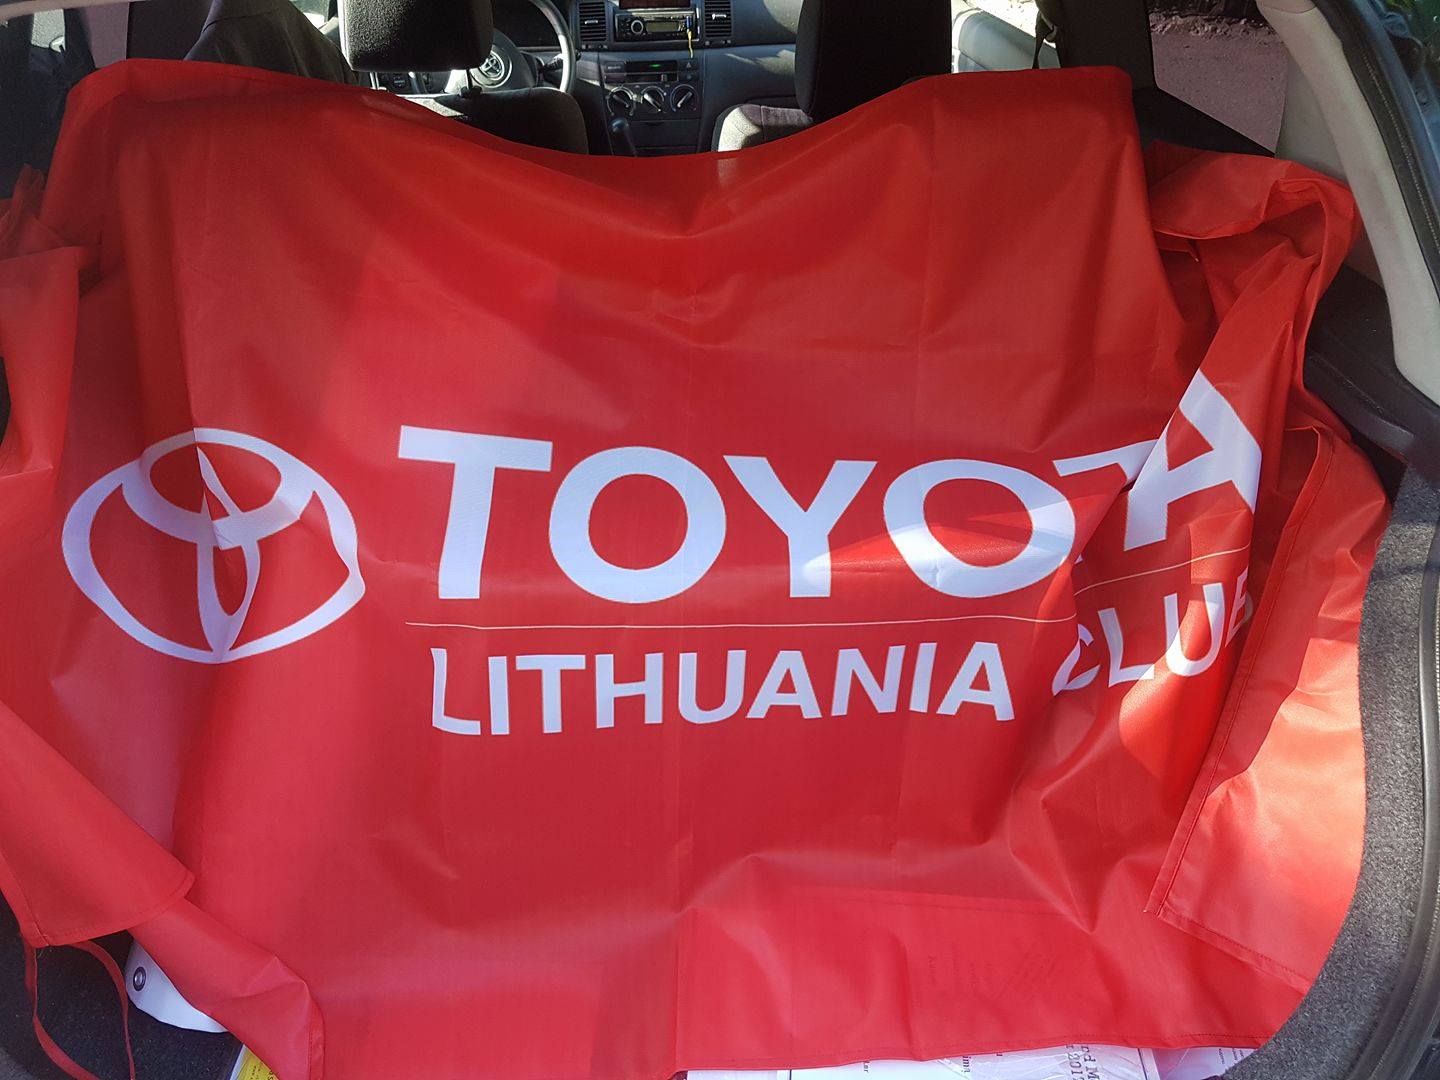 Toyota Lithuania Club pres. Summer mini meet - Vilnius